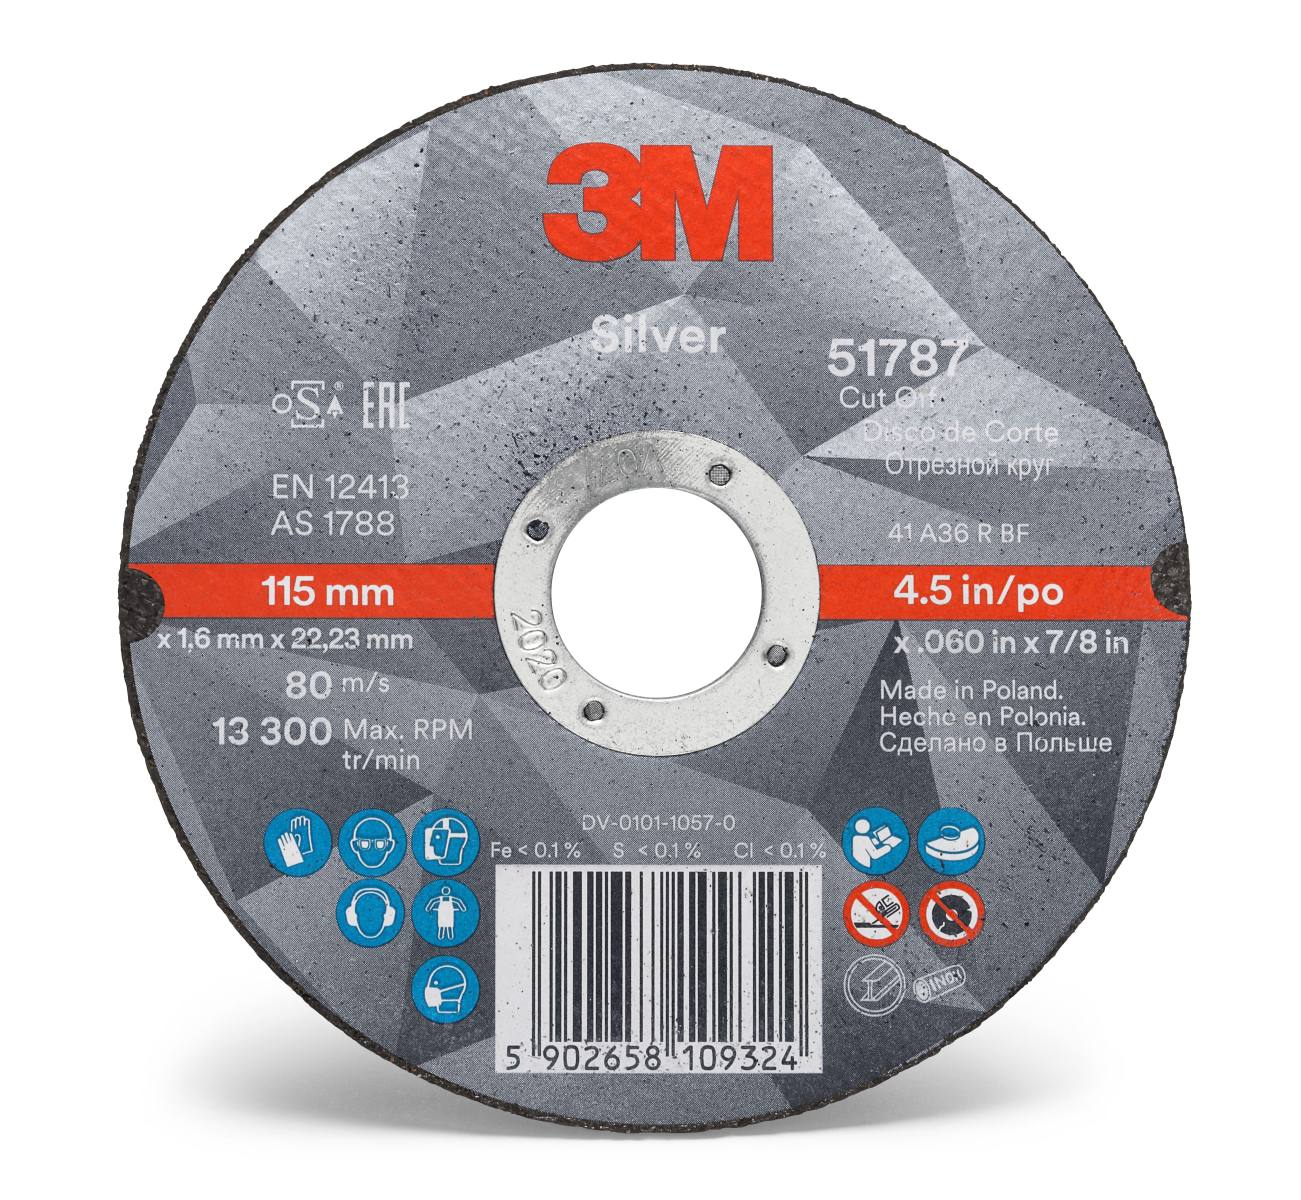 Disco de corte 3M Silver Cut-Off, 75 mm, 1,0 mm, 6 mm, T41, 51765